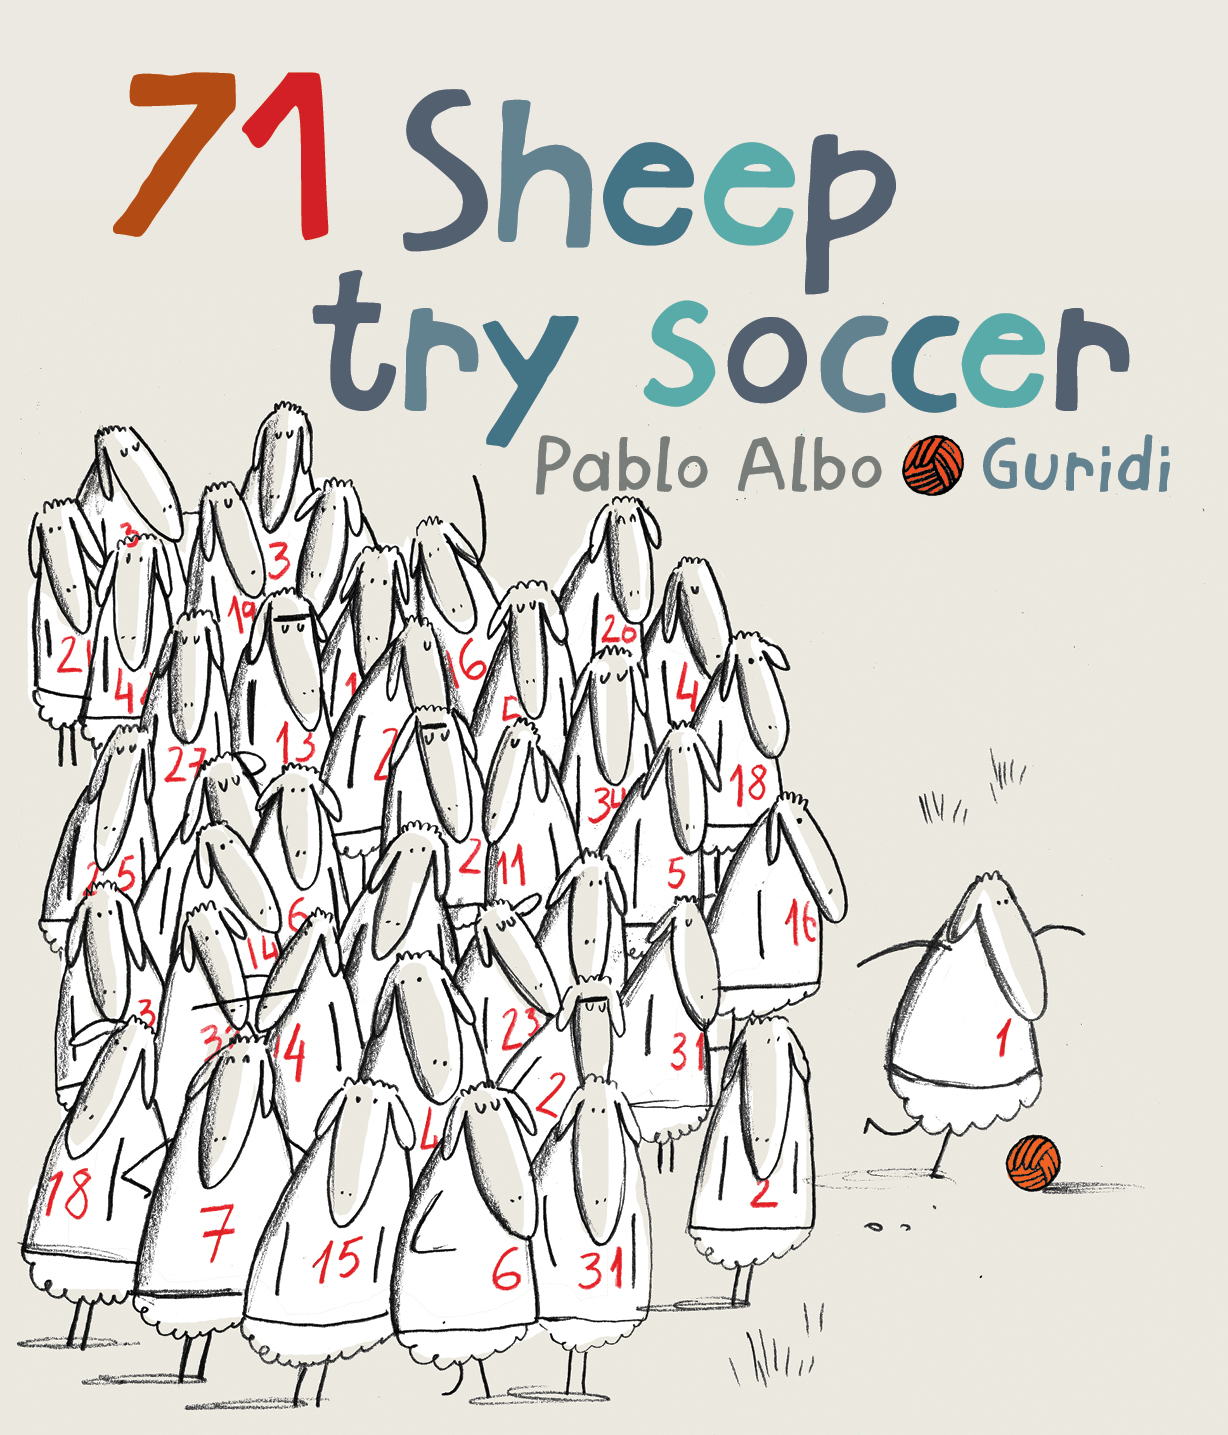 71 sheep cover.jpg